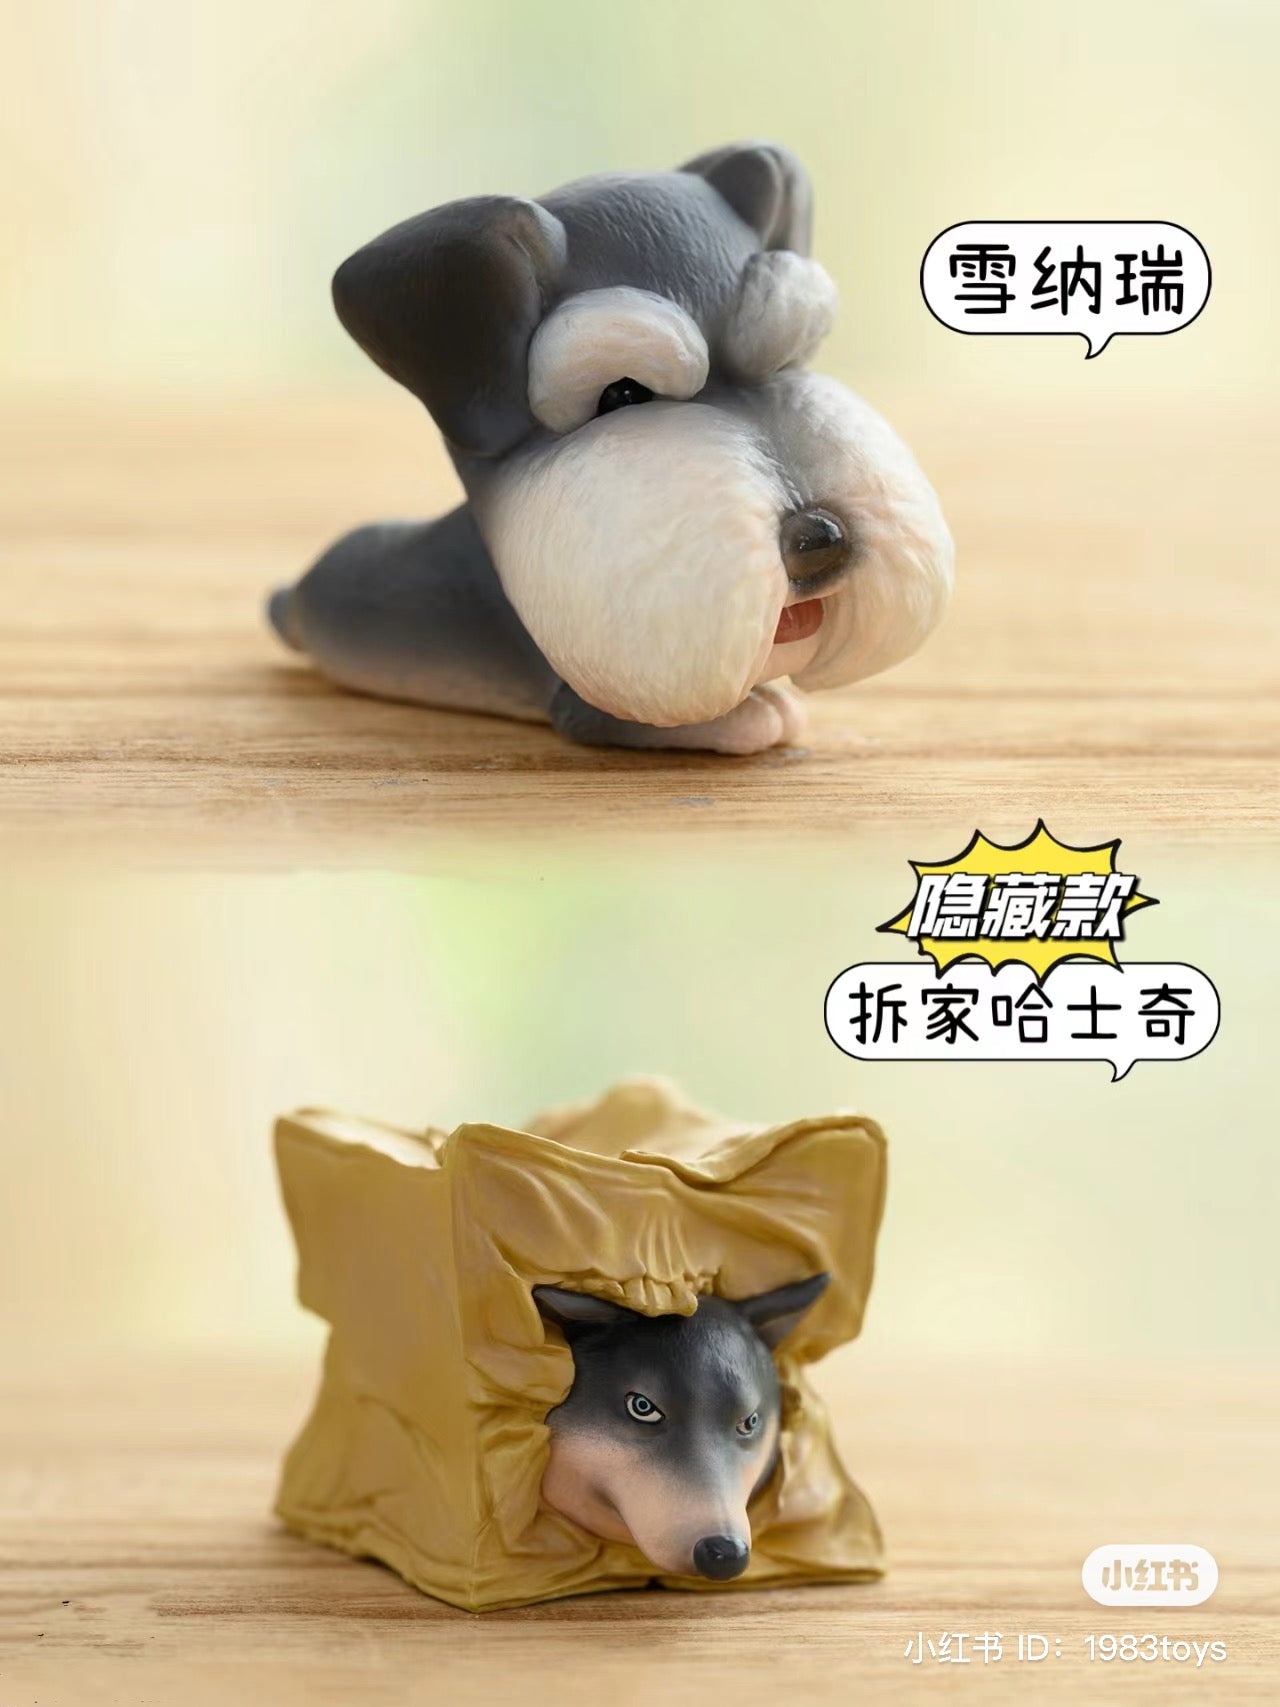 Cute Dog Story Blind Box Series